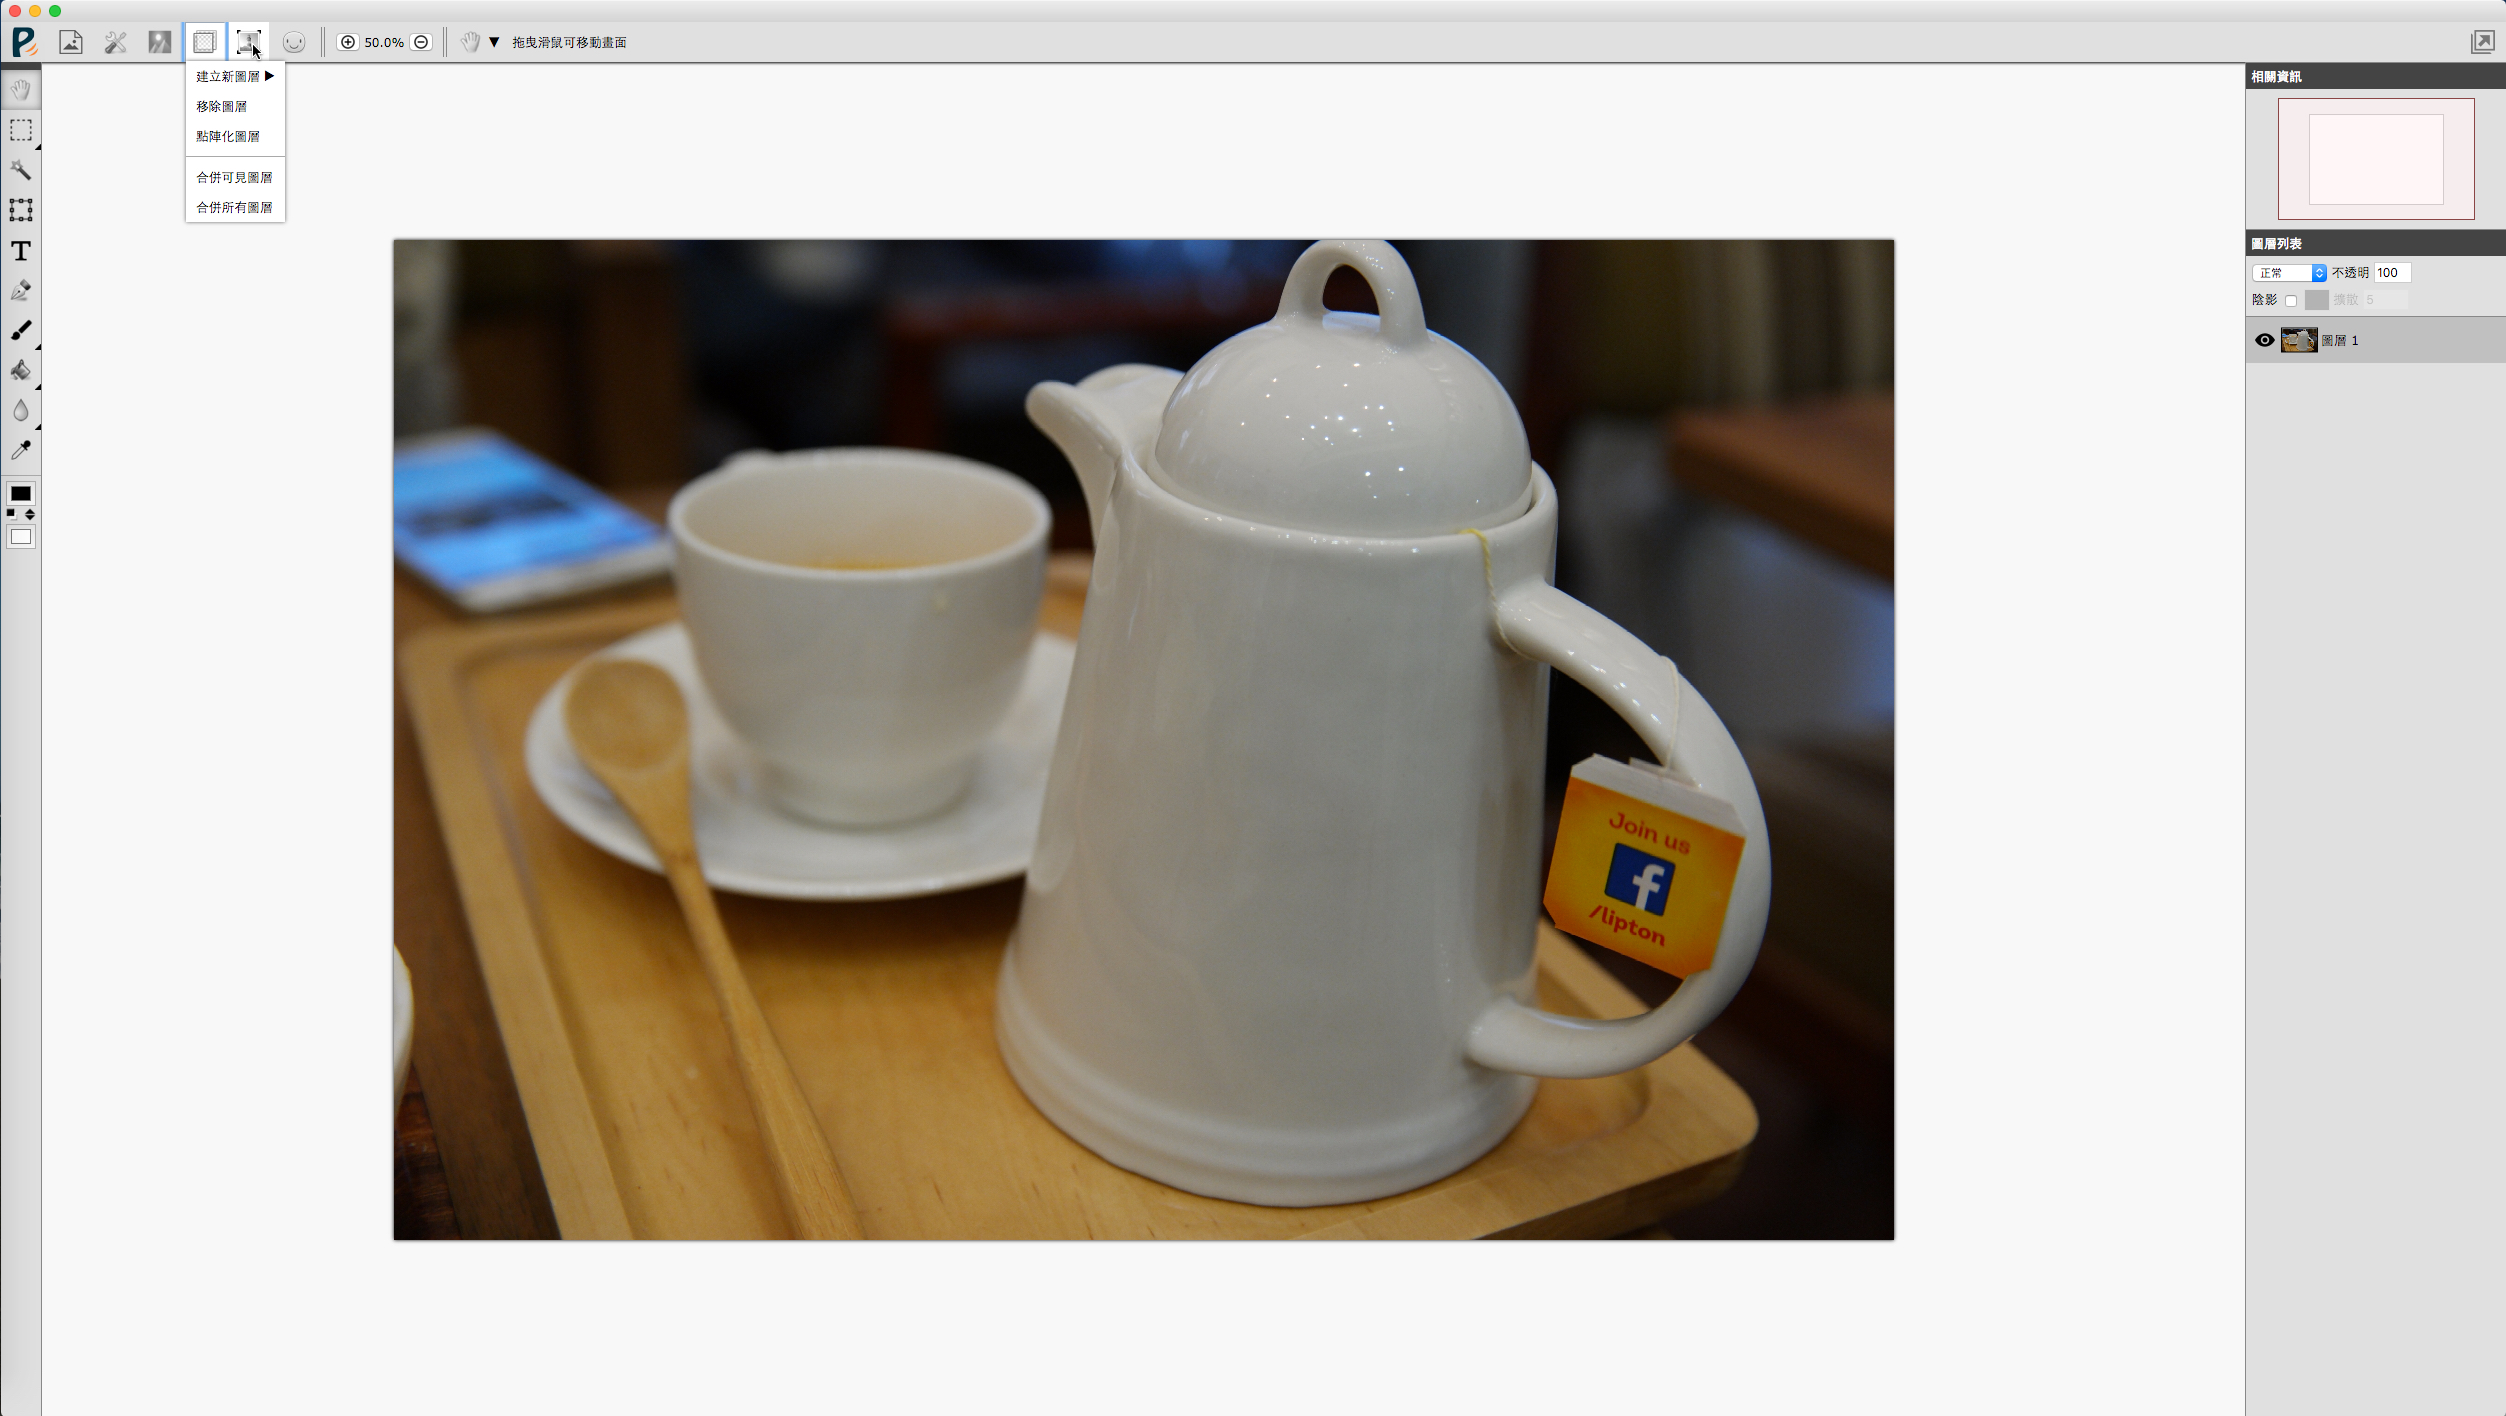 Piconion 影像處理工具，用 Chrome 瀏覽器就能簡單編輯圖片